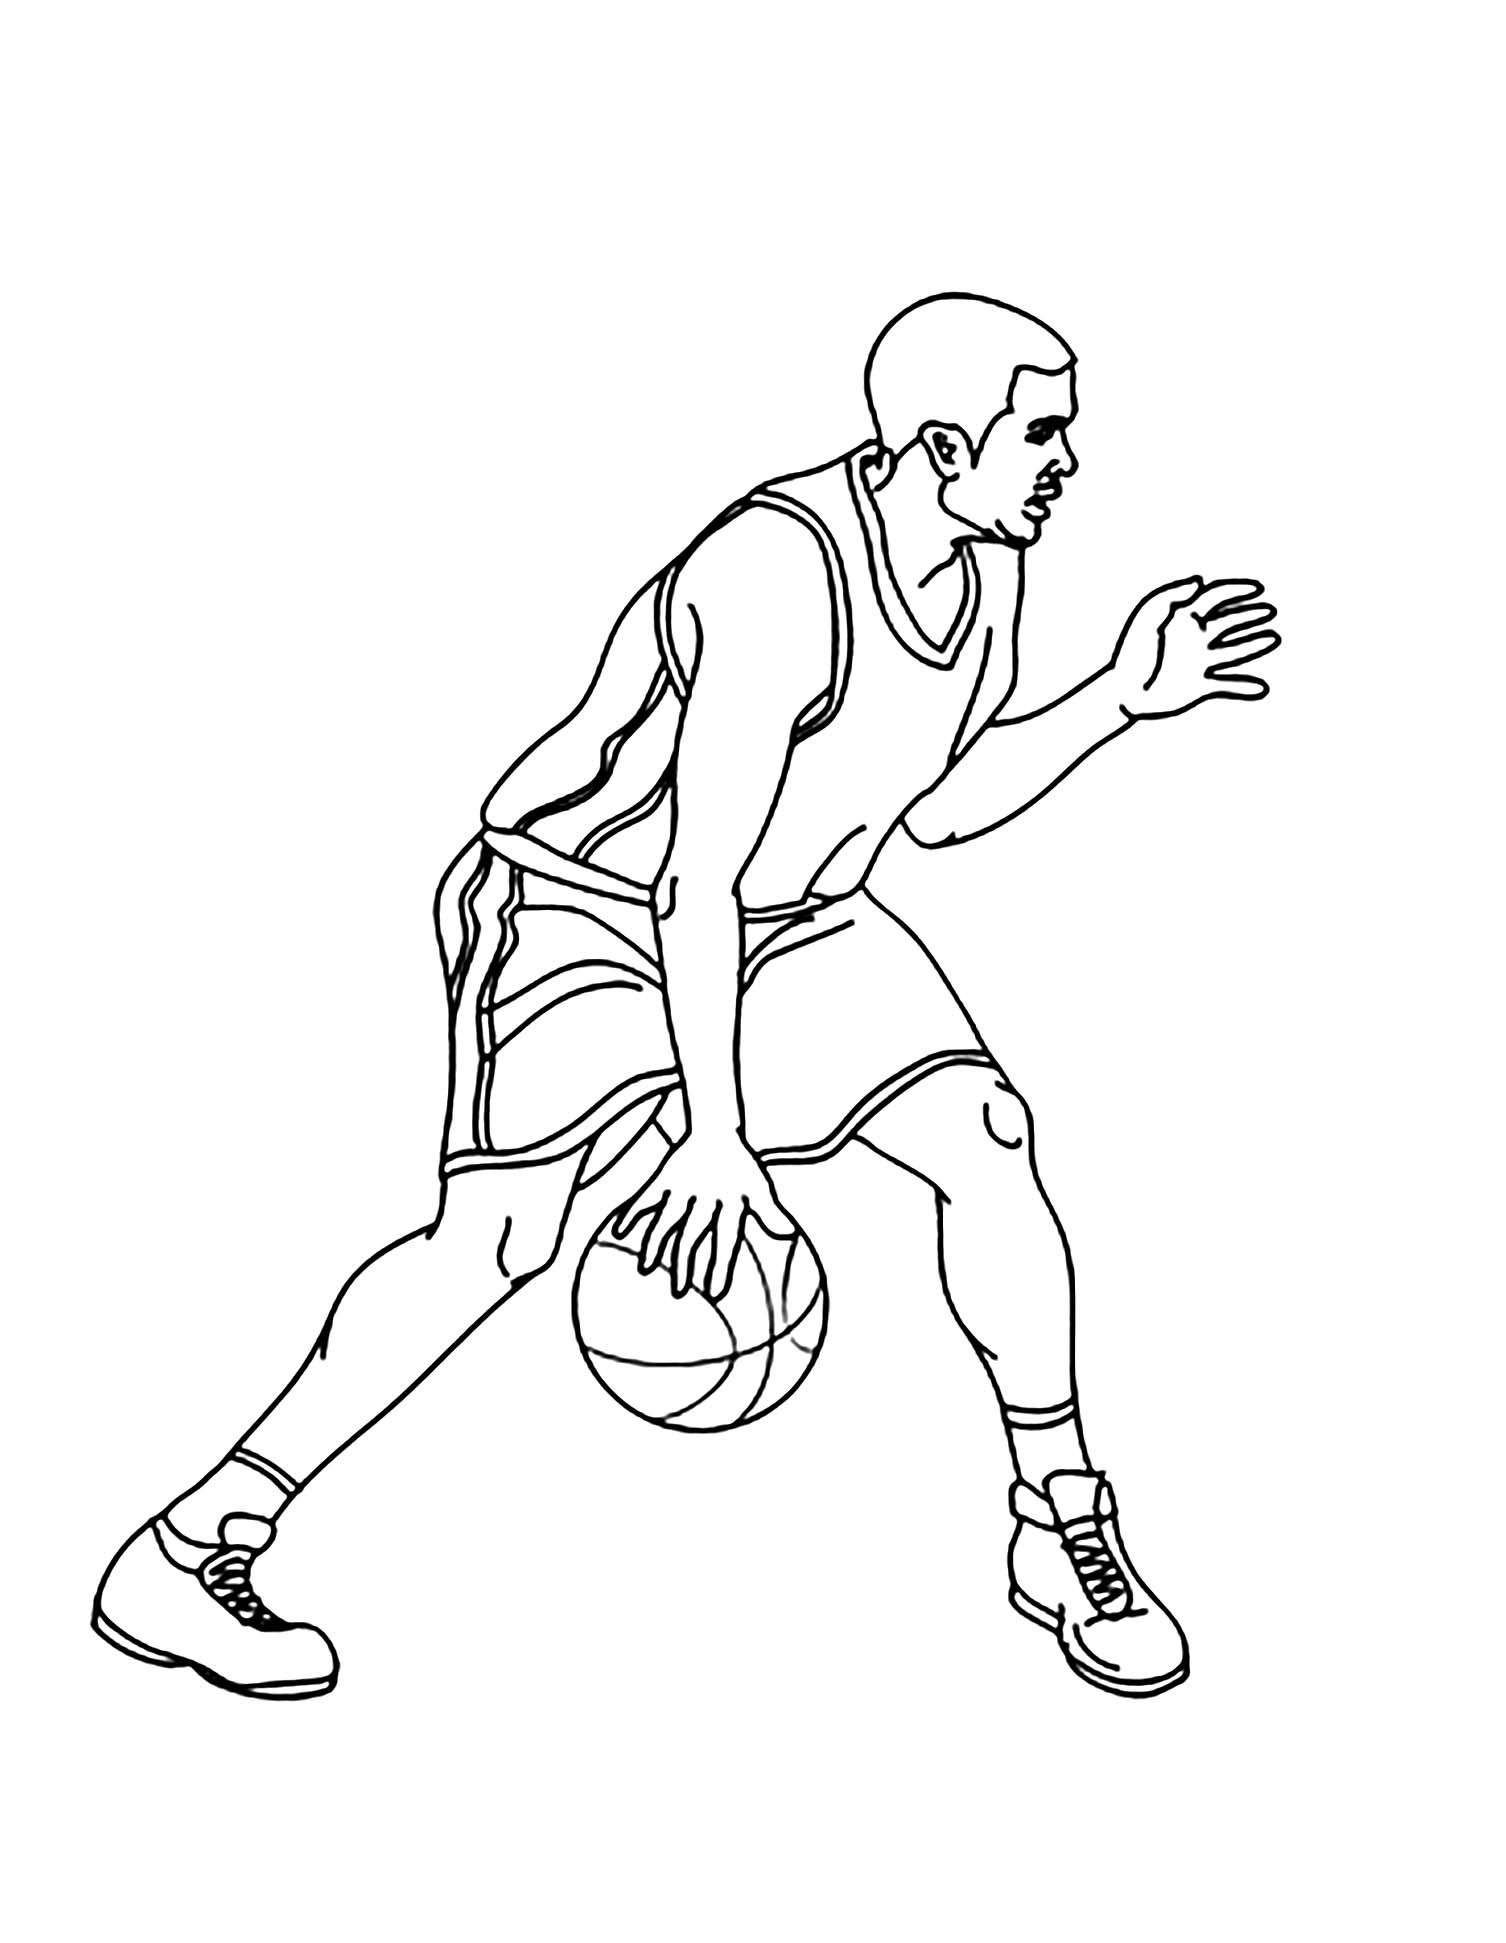 Coloriage de basketball simple